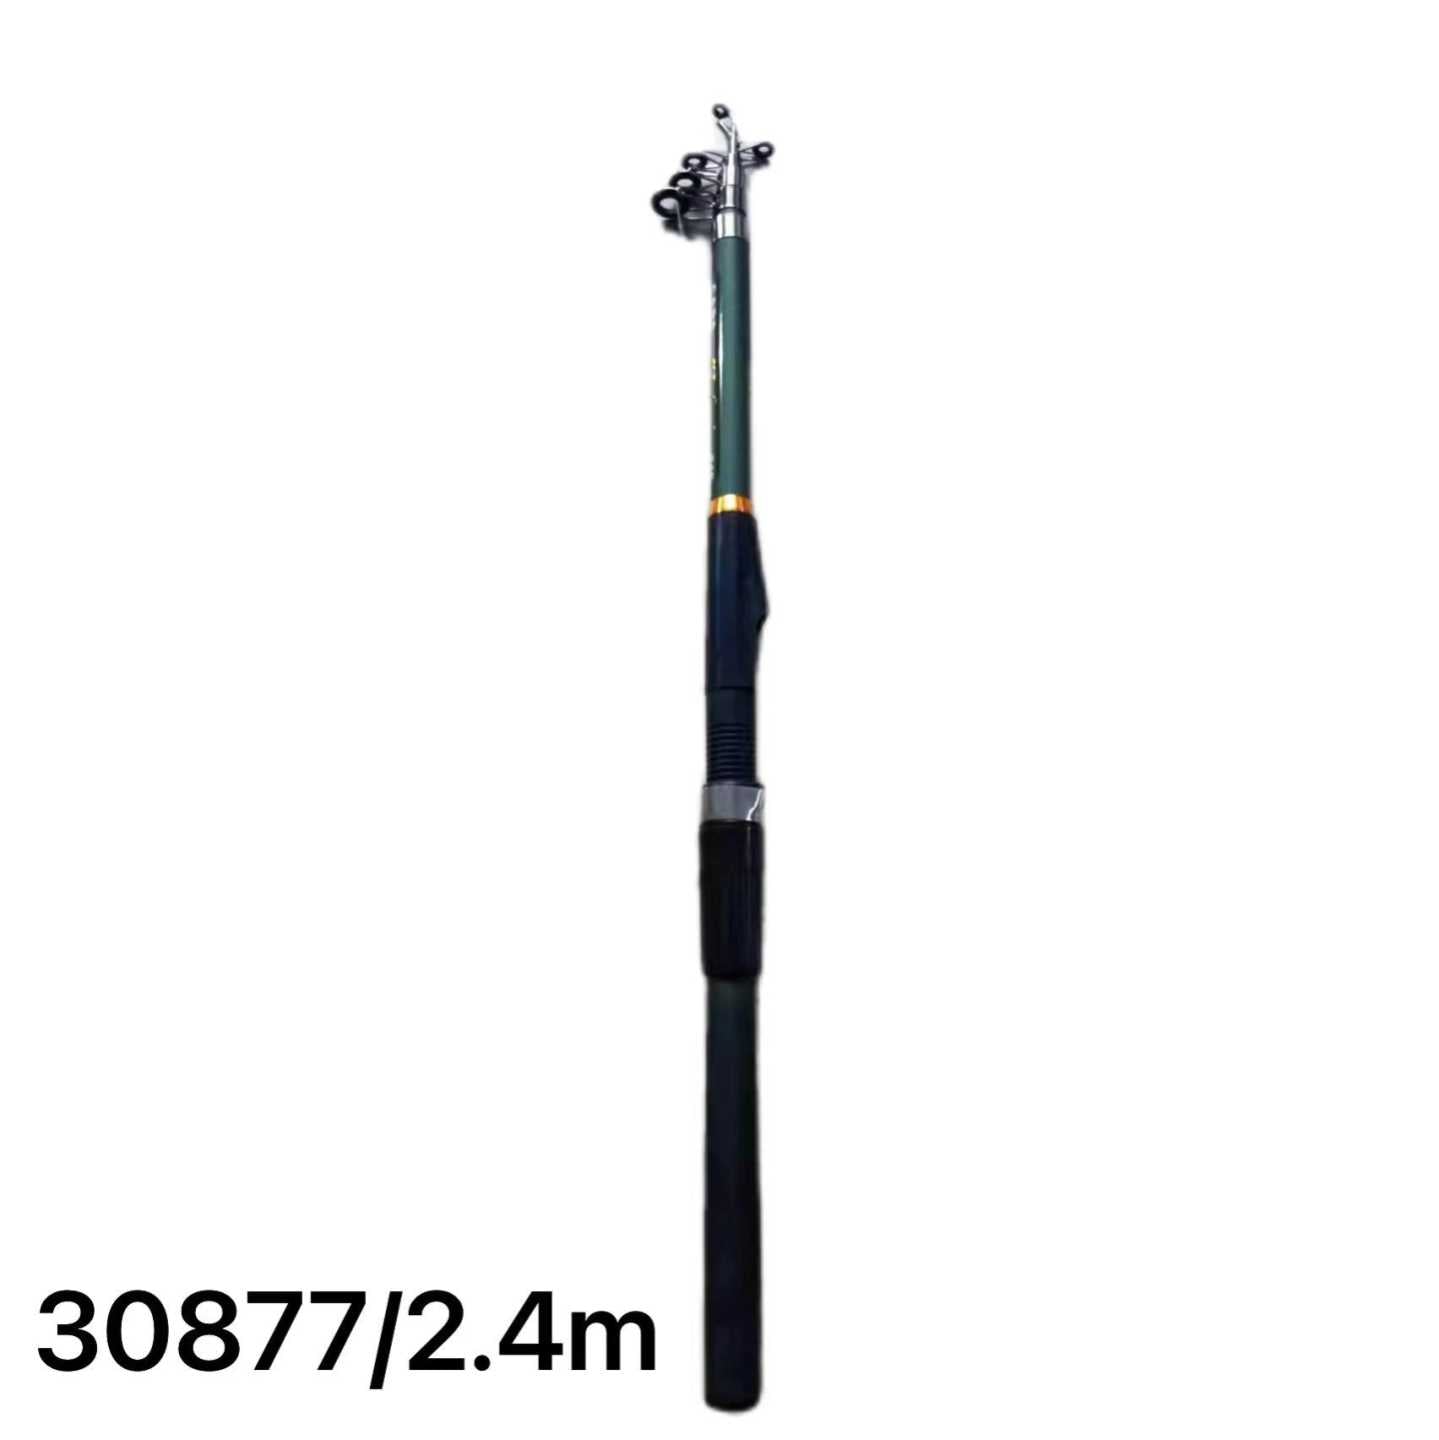 Fishing rod - Telescopic - 2.4m - 30877